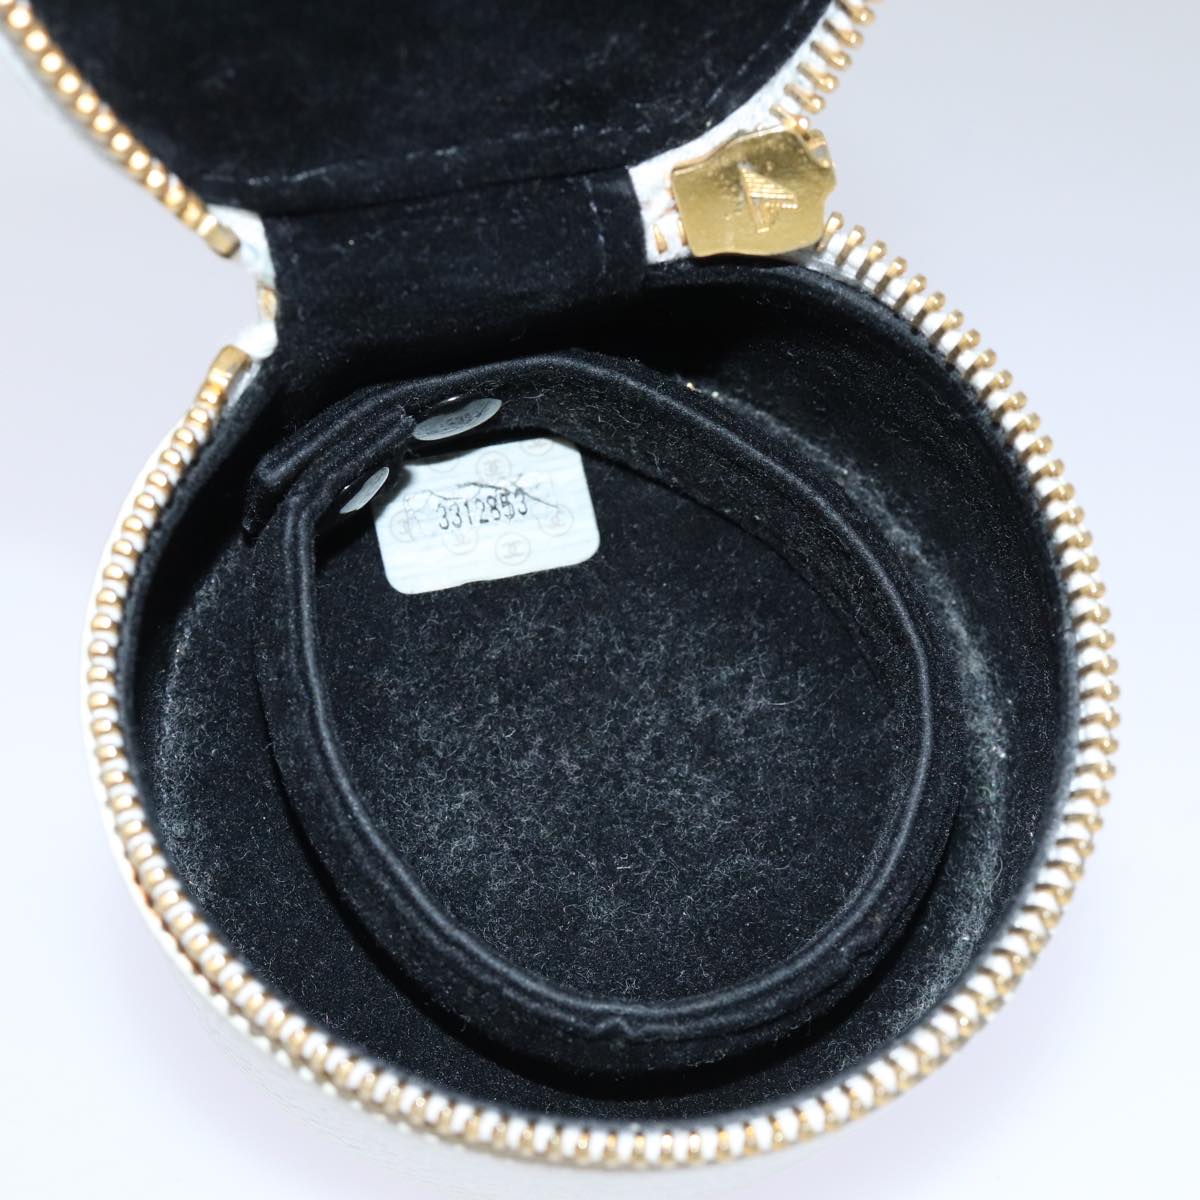 CHANEL COCO Mark Jewelry Case Jewelry Box Caviar Skin White CC Auth yk12479